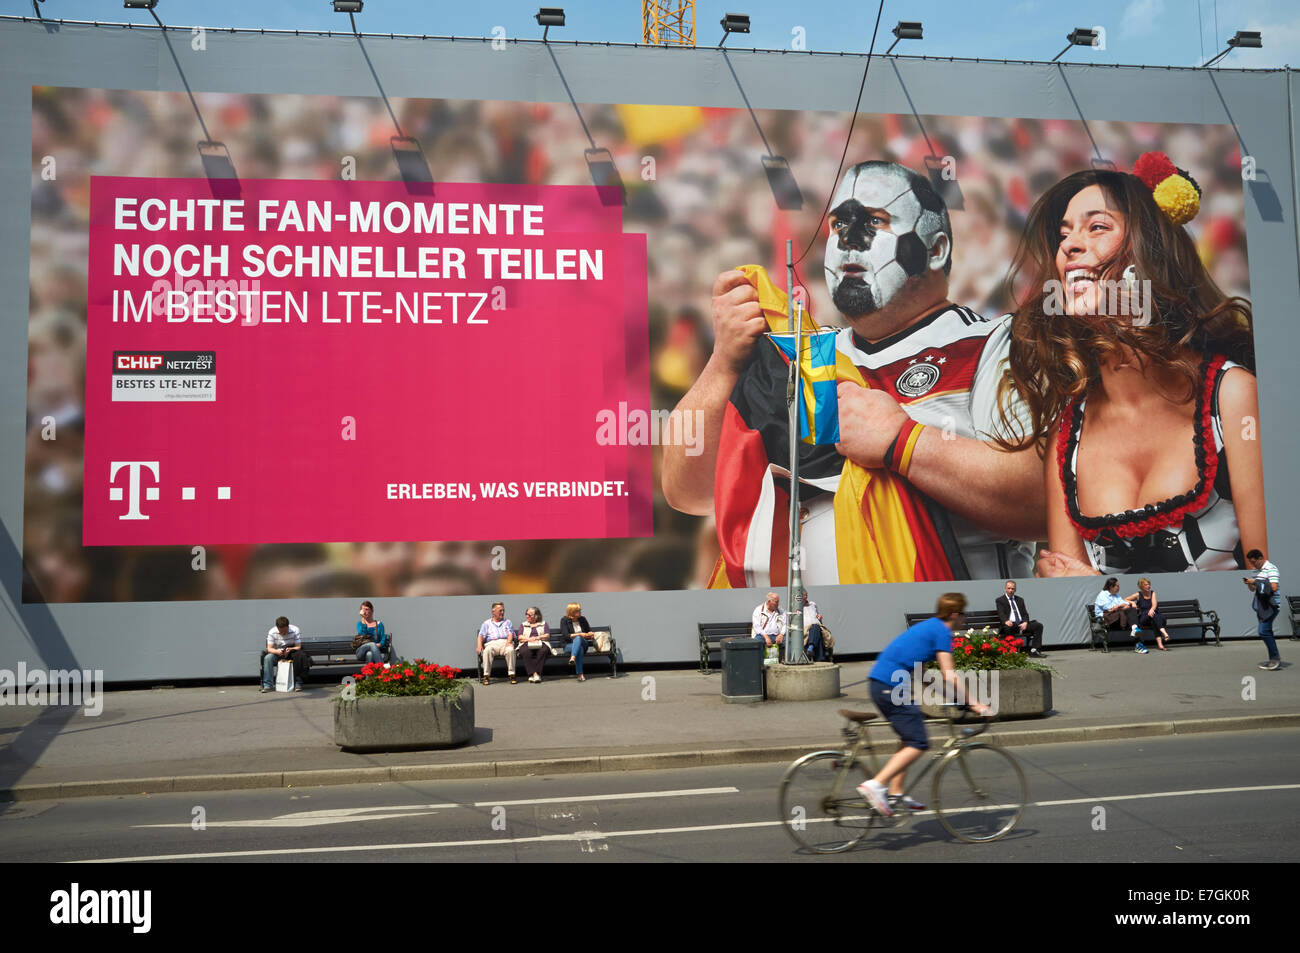 T Mobile billboard advert Dusseldorf Germany Stock Photo